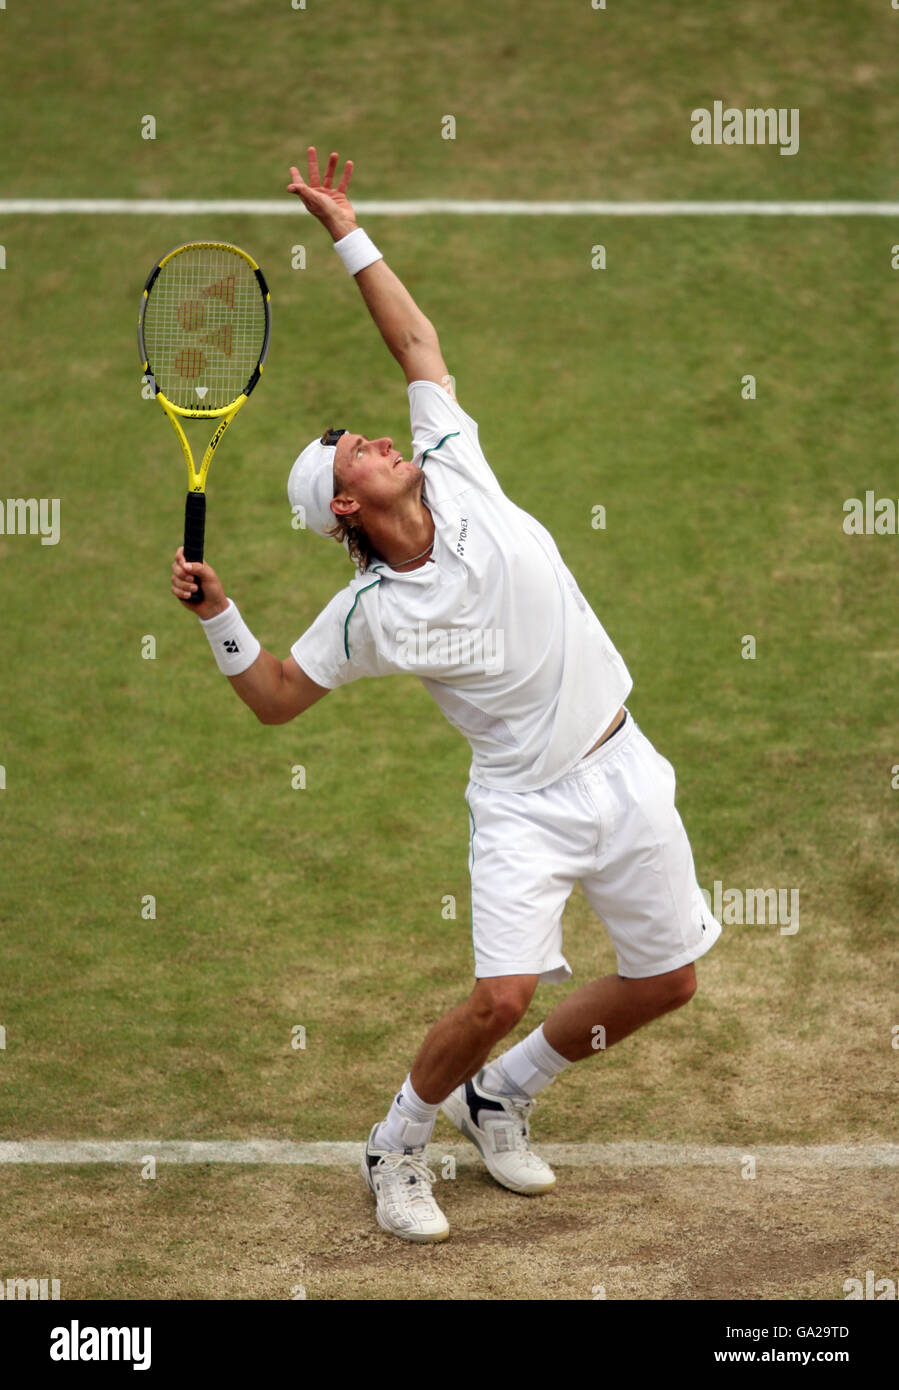 Tennis - Championnat de Wimbledon 2007 - jour 10 - All England Club. Lleyton Hewitt en action contre Novak Djokovic Banque D'Images